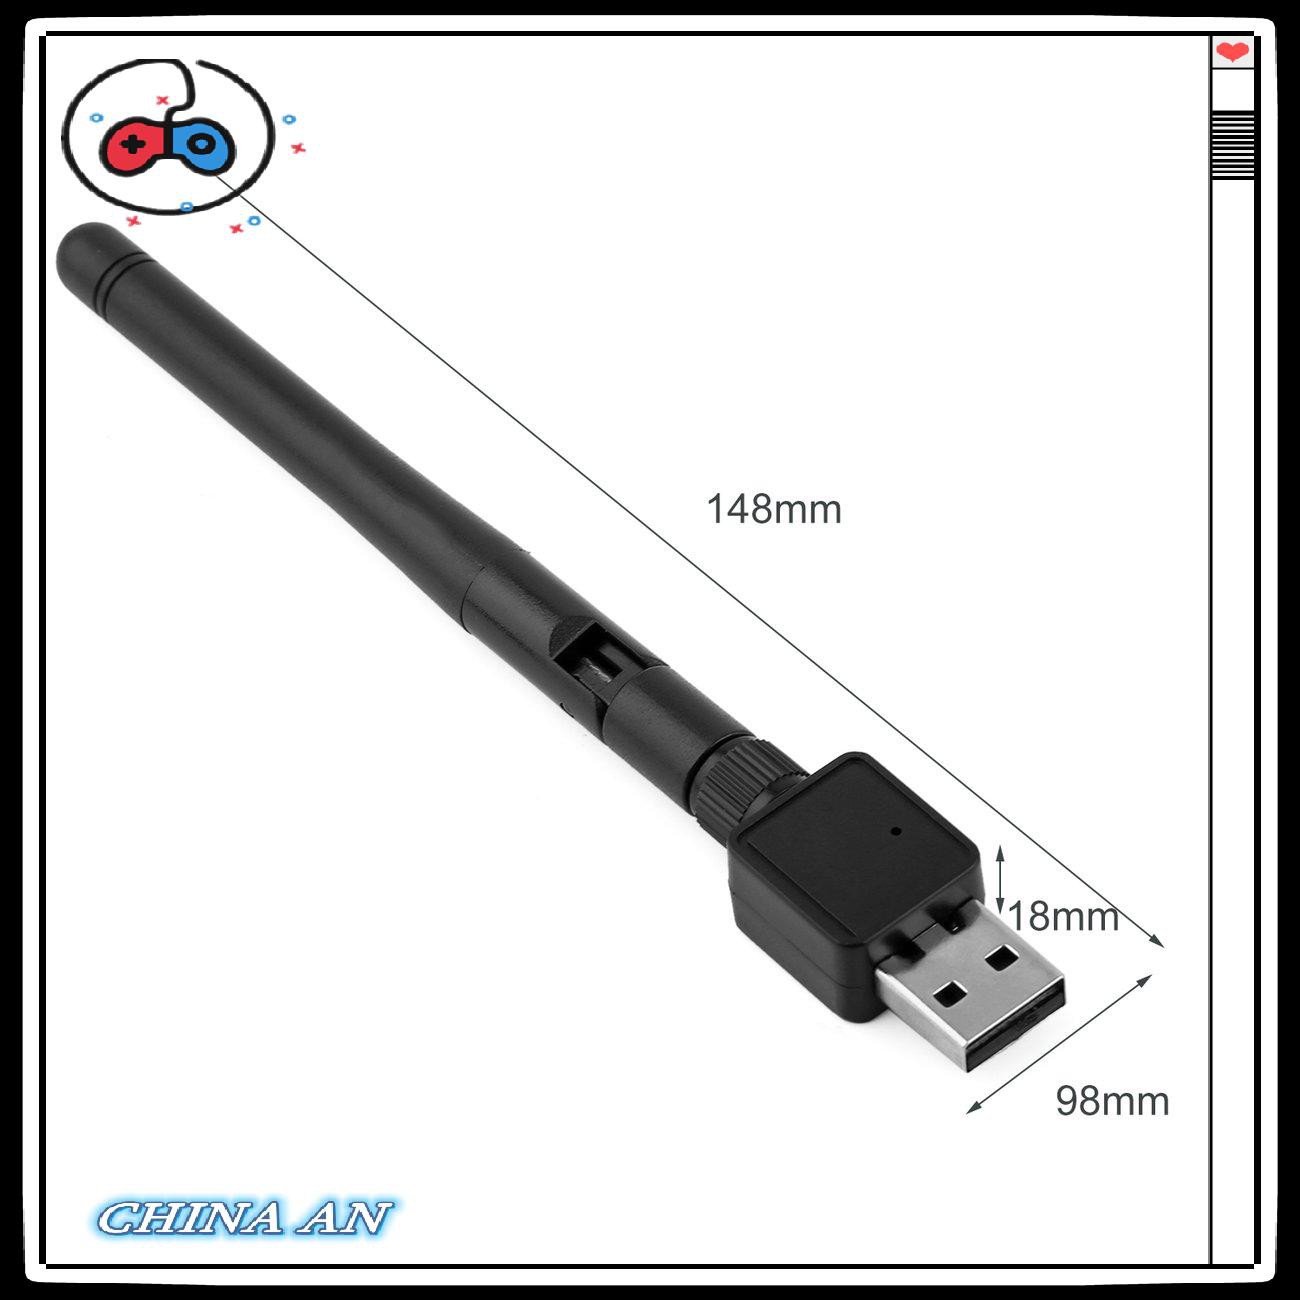 ⚡Hot sản phẩm/Mini USB Wireless WiFi Adapter 802.11n/g/b 150Mbps Network LAN Card w/Antenna